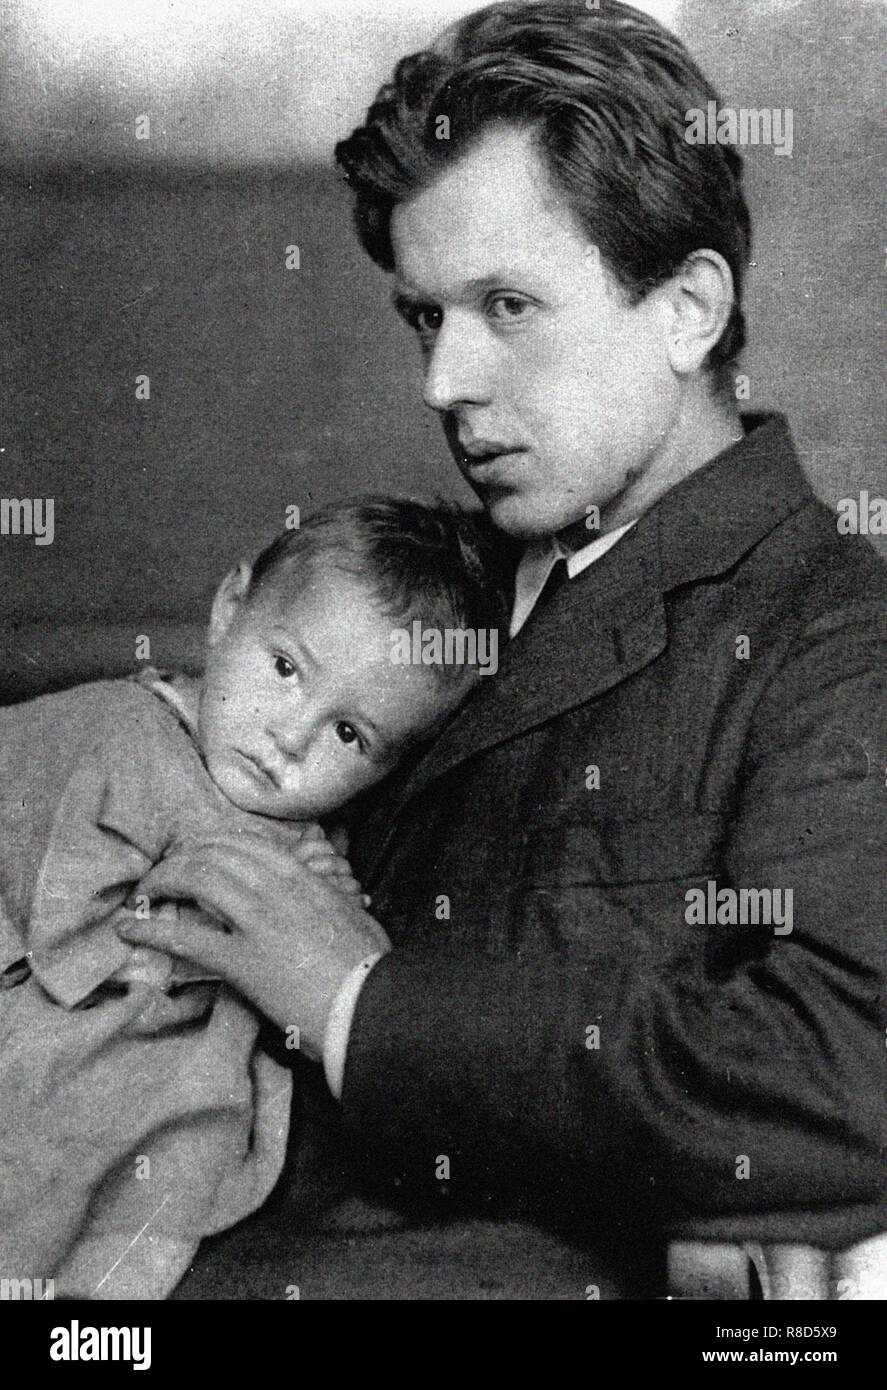 Fritz Platten (1883-1942) mit seinem Sohn Georg, 1910. Stockfoto